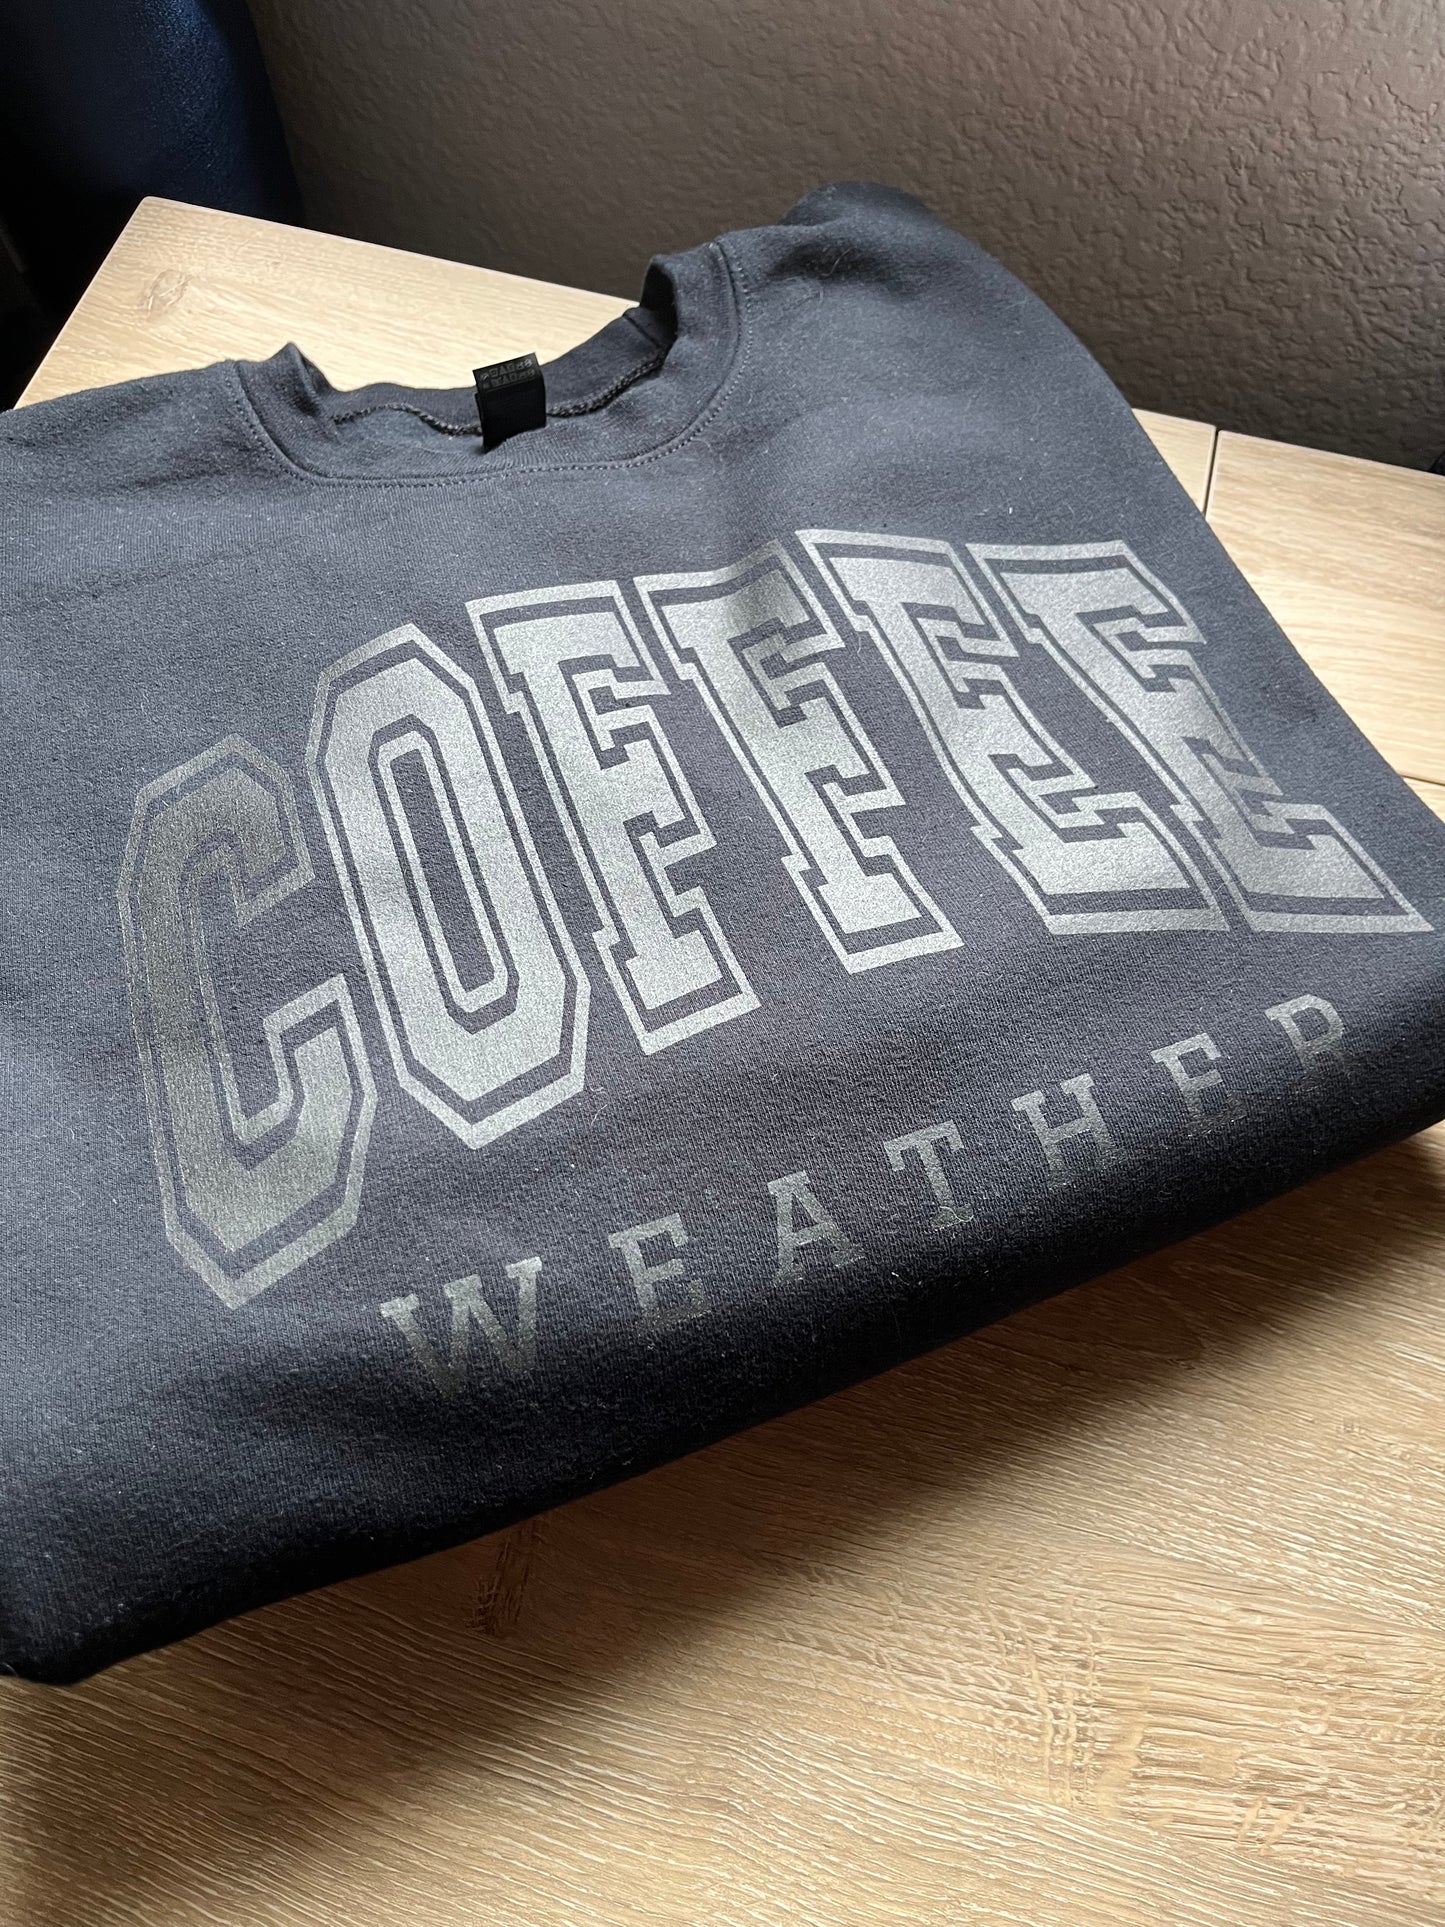 Coffee weather sweater